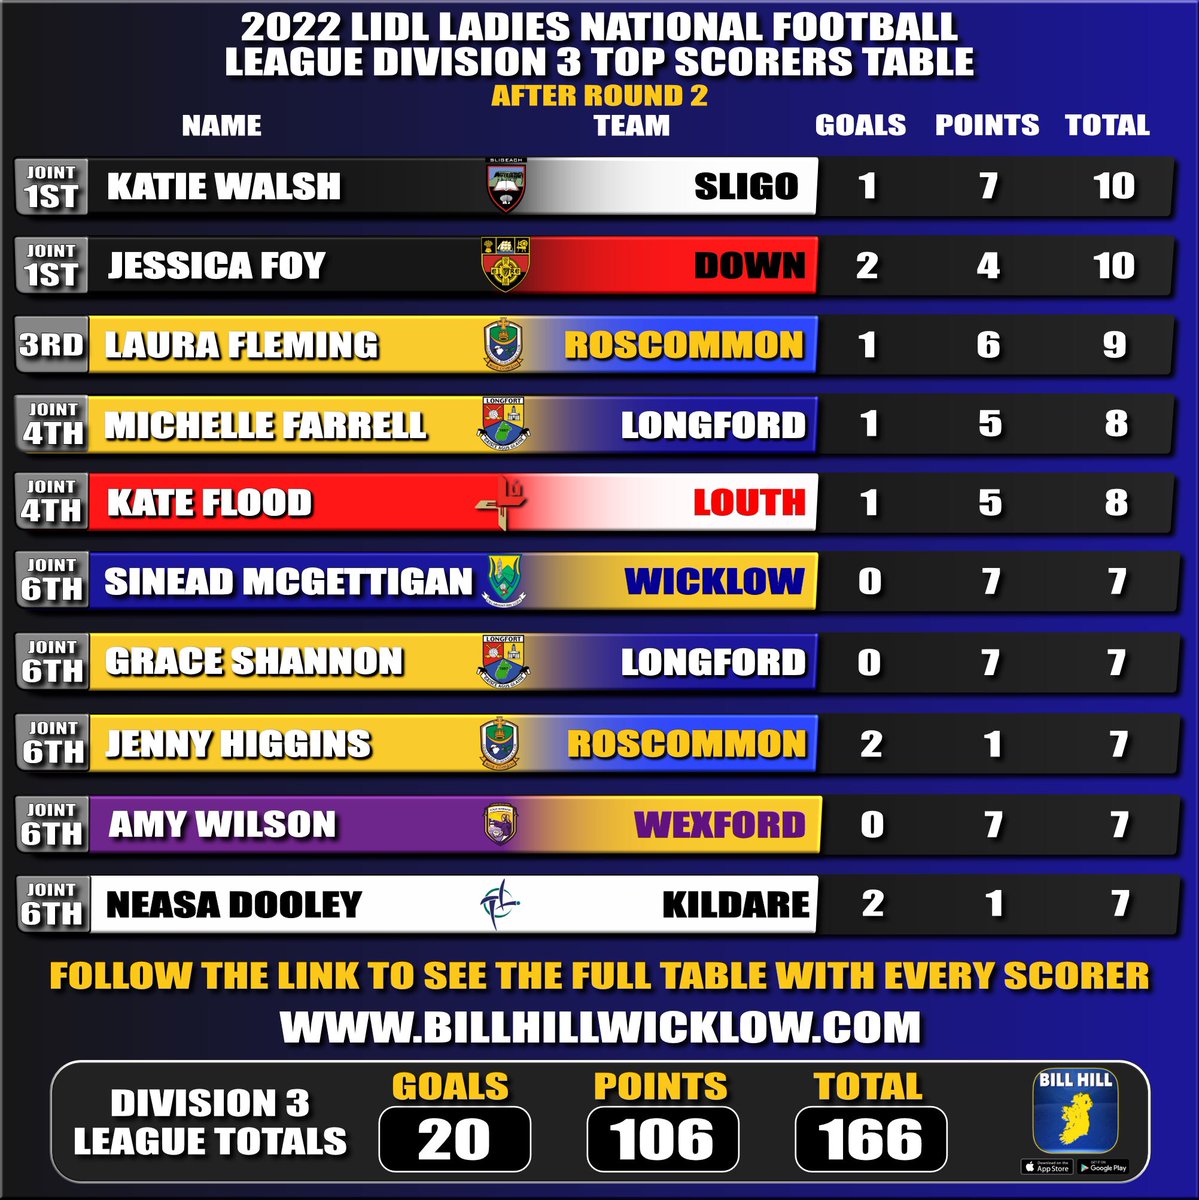 Lidl @LadiesFootball Div.3 League Top Scorers after Round 2
@SligoLGFA - Walsh
@DownLGFA - Foy
@RoscommonLGFA - Fleming
@LongfordLgfa - Farrell
@LouthLGFA - Flood
@Wicklowlgfa - McGettigan
@WexLadiesFoot - Wilson
@KildareLGFA - Dooley
billhillwicklow.com/list/55426/ #LGFA